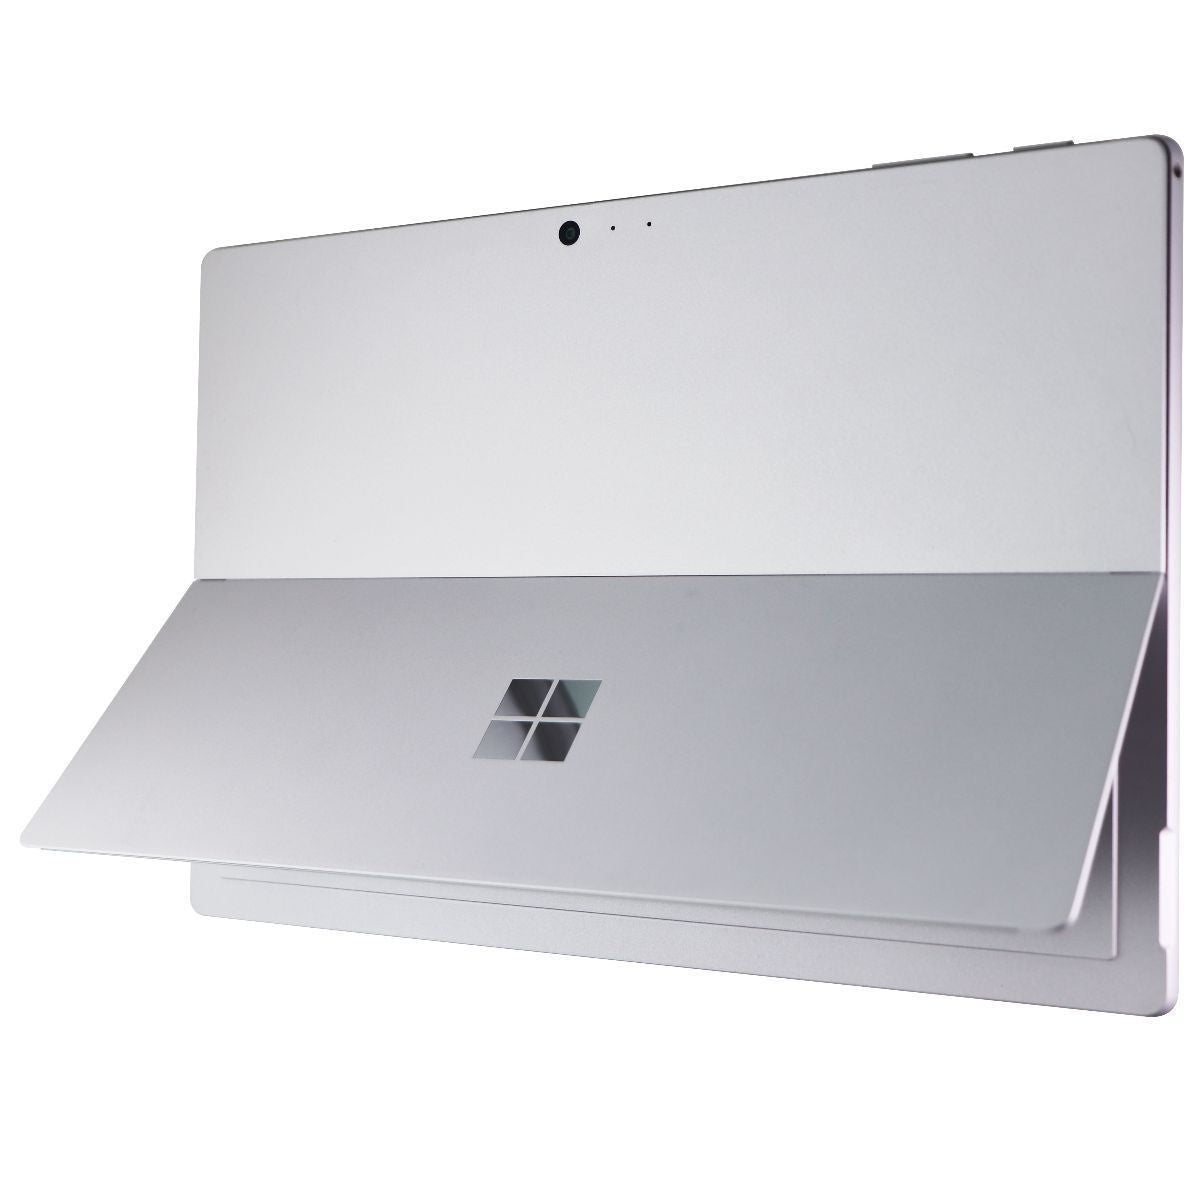 Microsoft Surface Pro 6 (1796) - Intel Core i5-8250U /8GB RAM/128GB - Platinum Laptops - PC Laptops & Netbooks Microsoft    - Simple Cell Bulk Wholesale Pricing - USA Seller